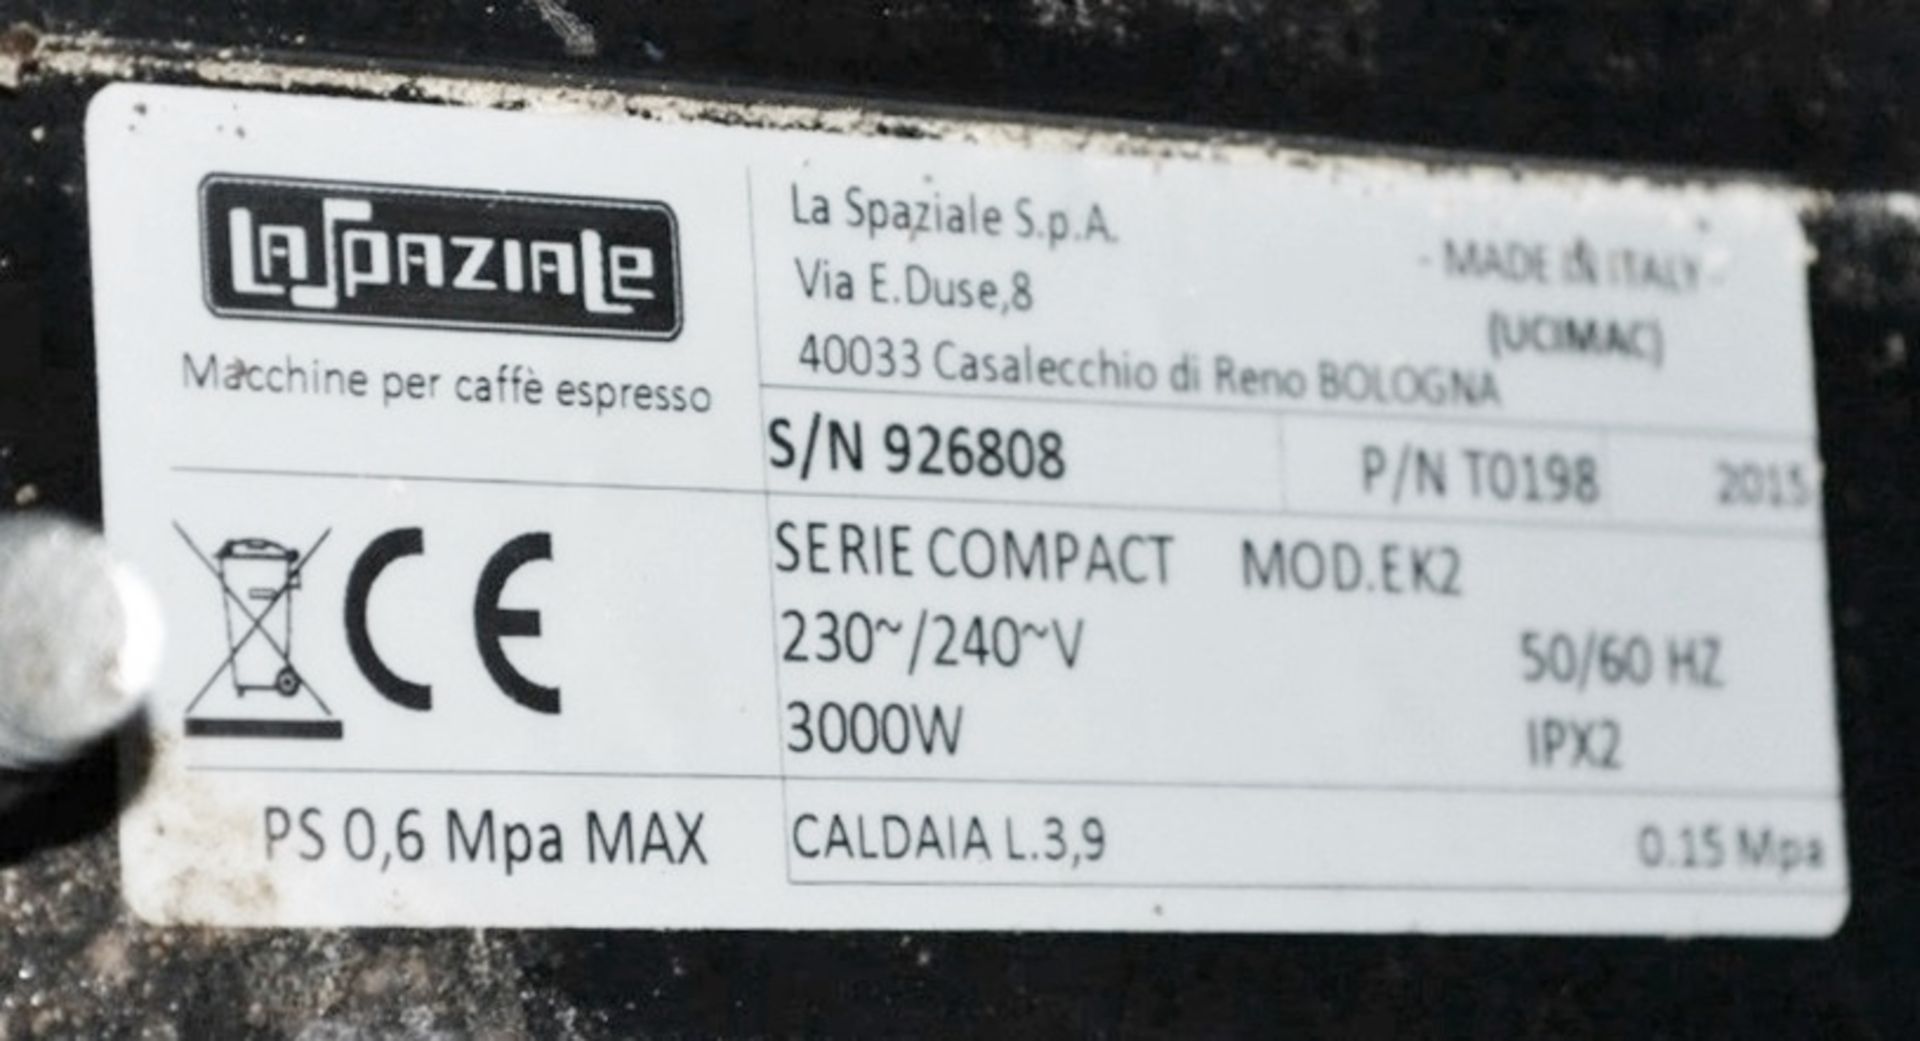 1 x La Spaziale EK2 Compact 2 Group Espresso Coffee Machine - Bright Red Finish - CL350 - Ref210 - Image 6 of 6